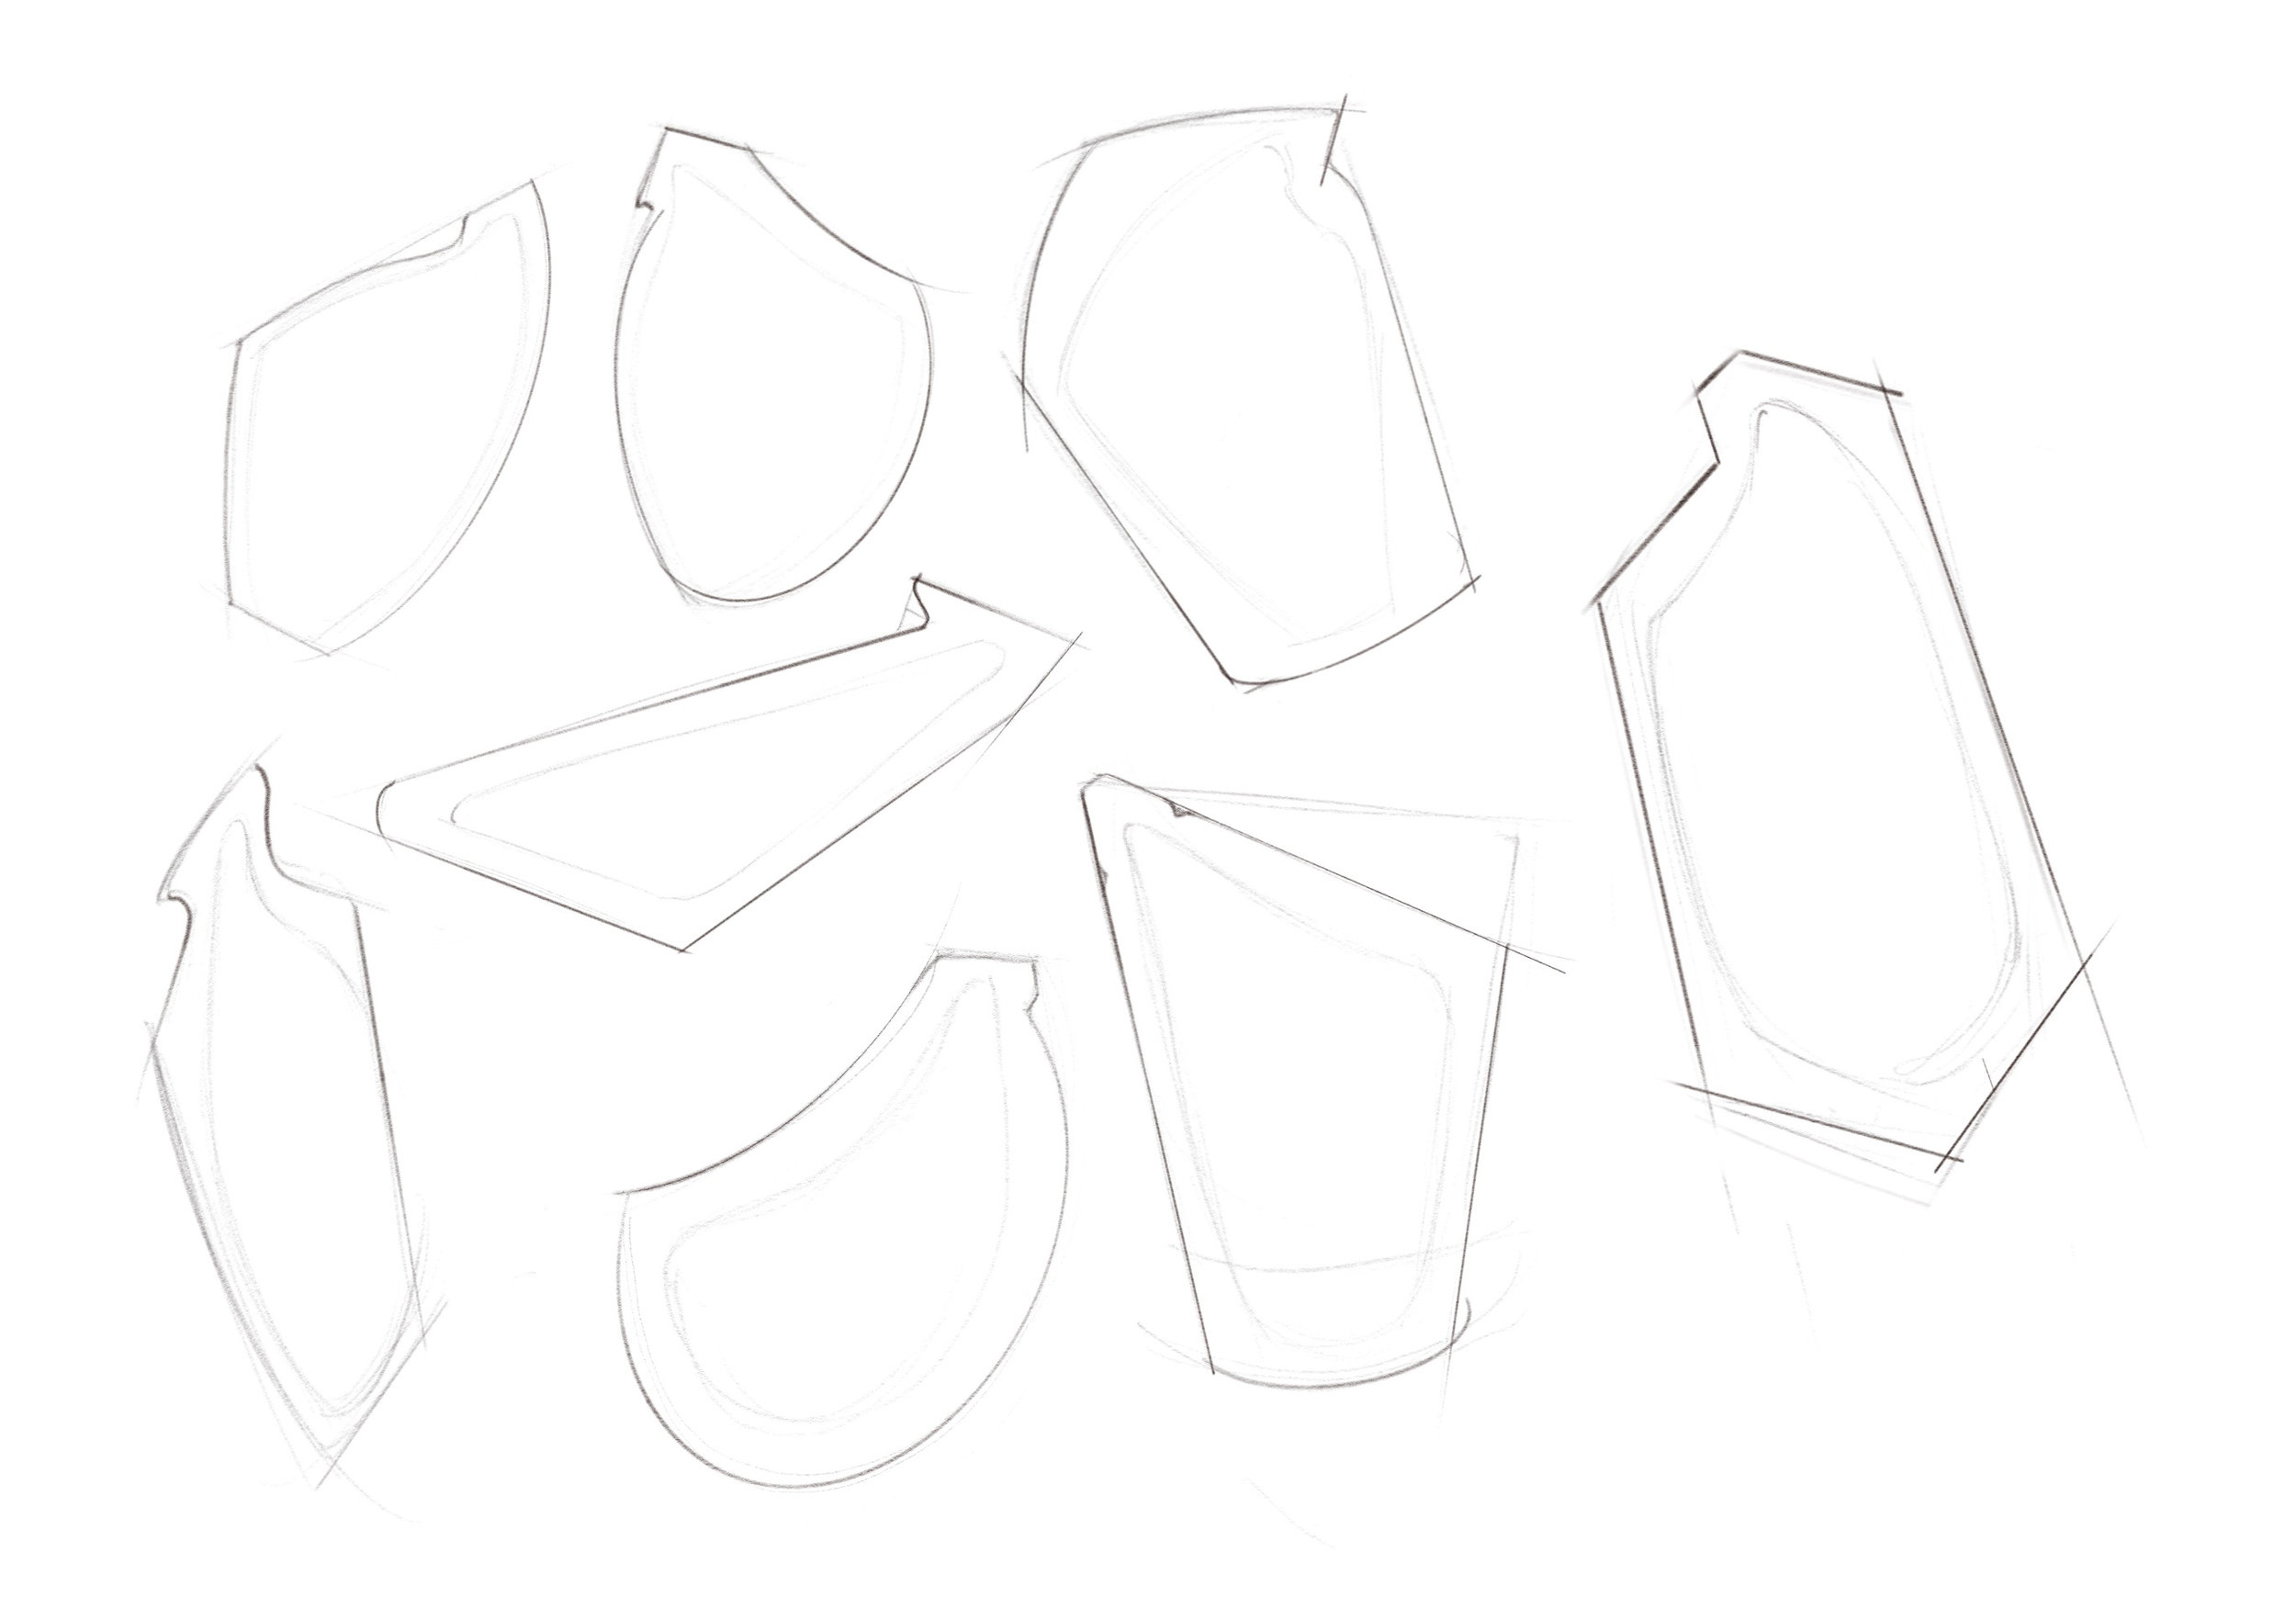  Form sketches for energy gel packaging based on ESM images. 